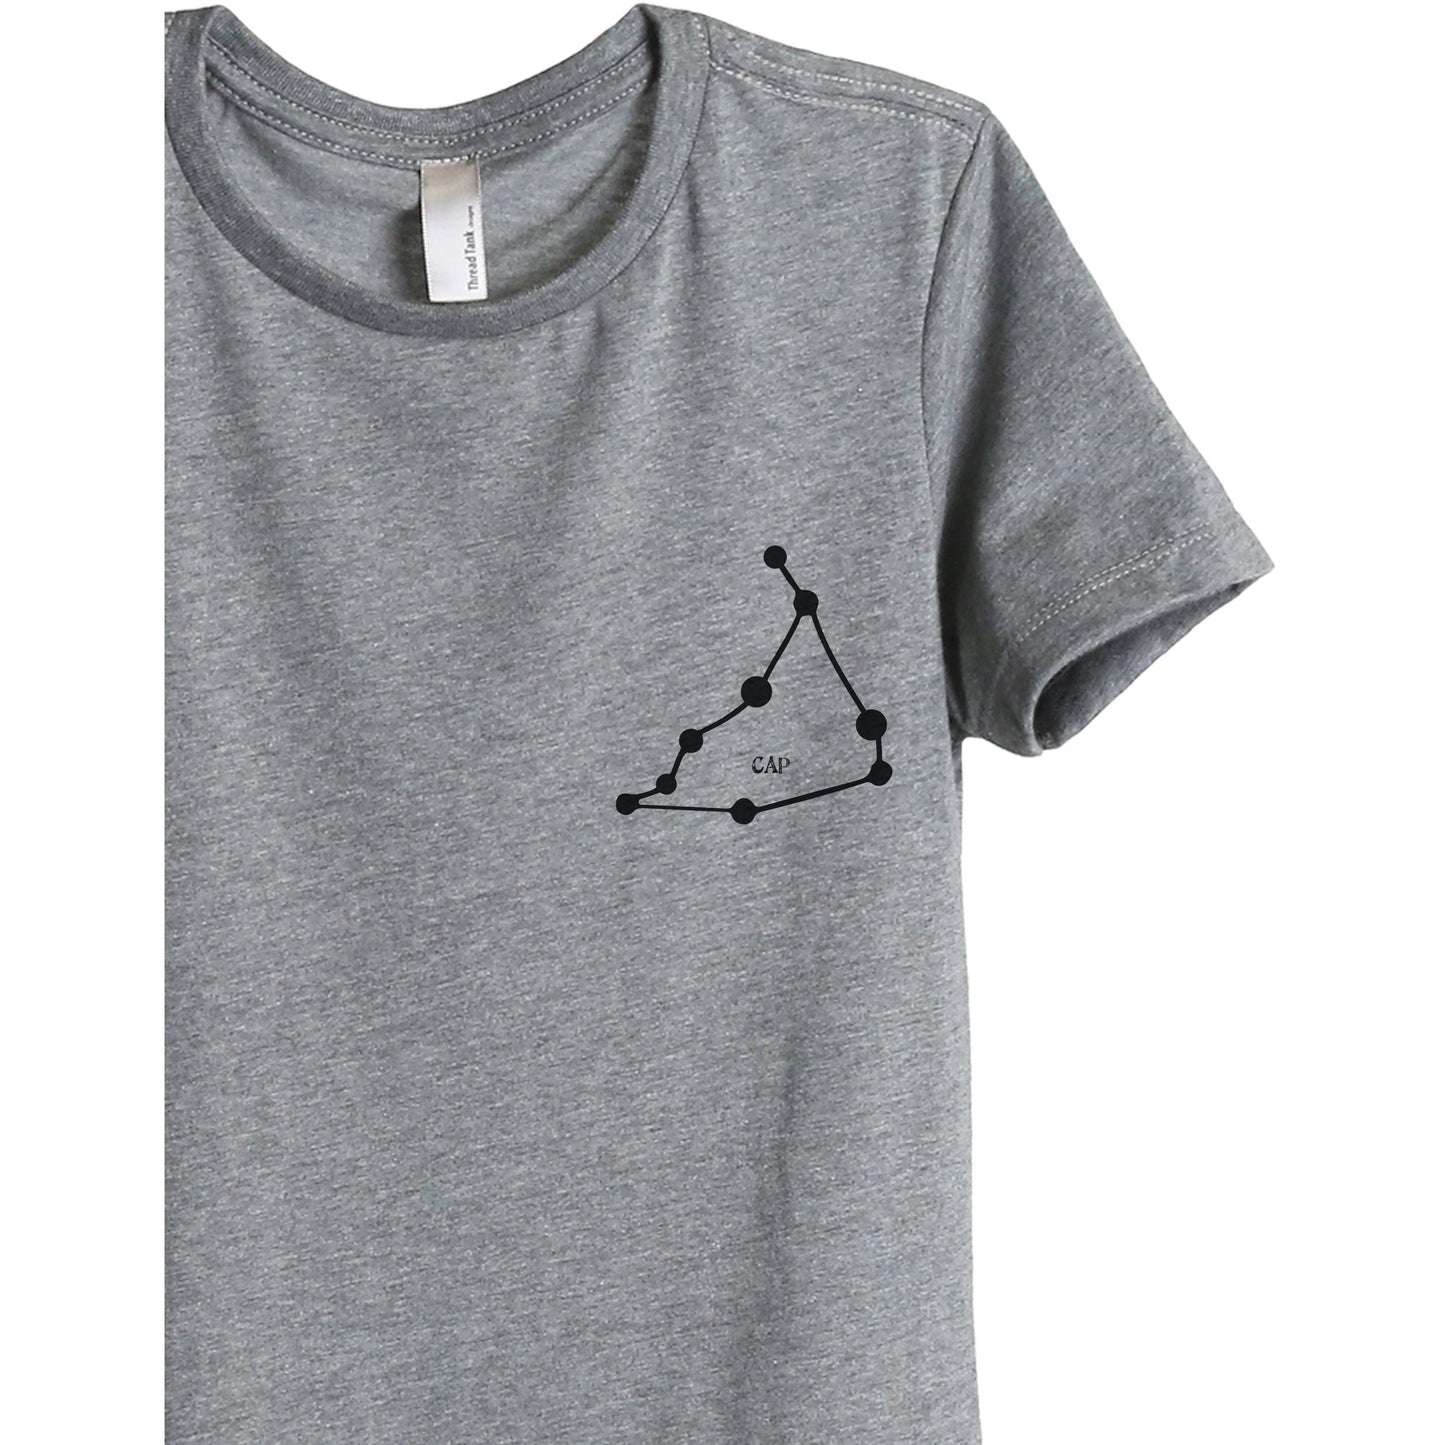 Capricorn CAP Constellation Astrology Women's Relaxed Crewneck T-Shirt Top Tee Heather Grey Zoom Details
